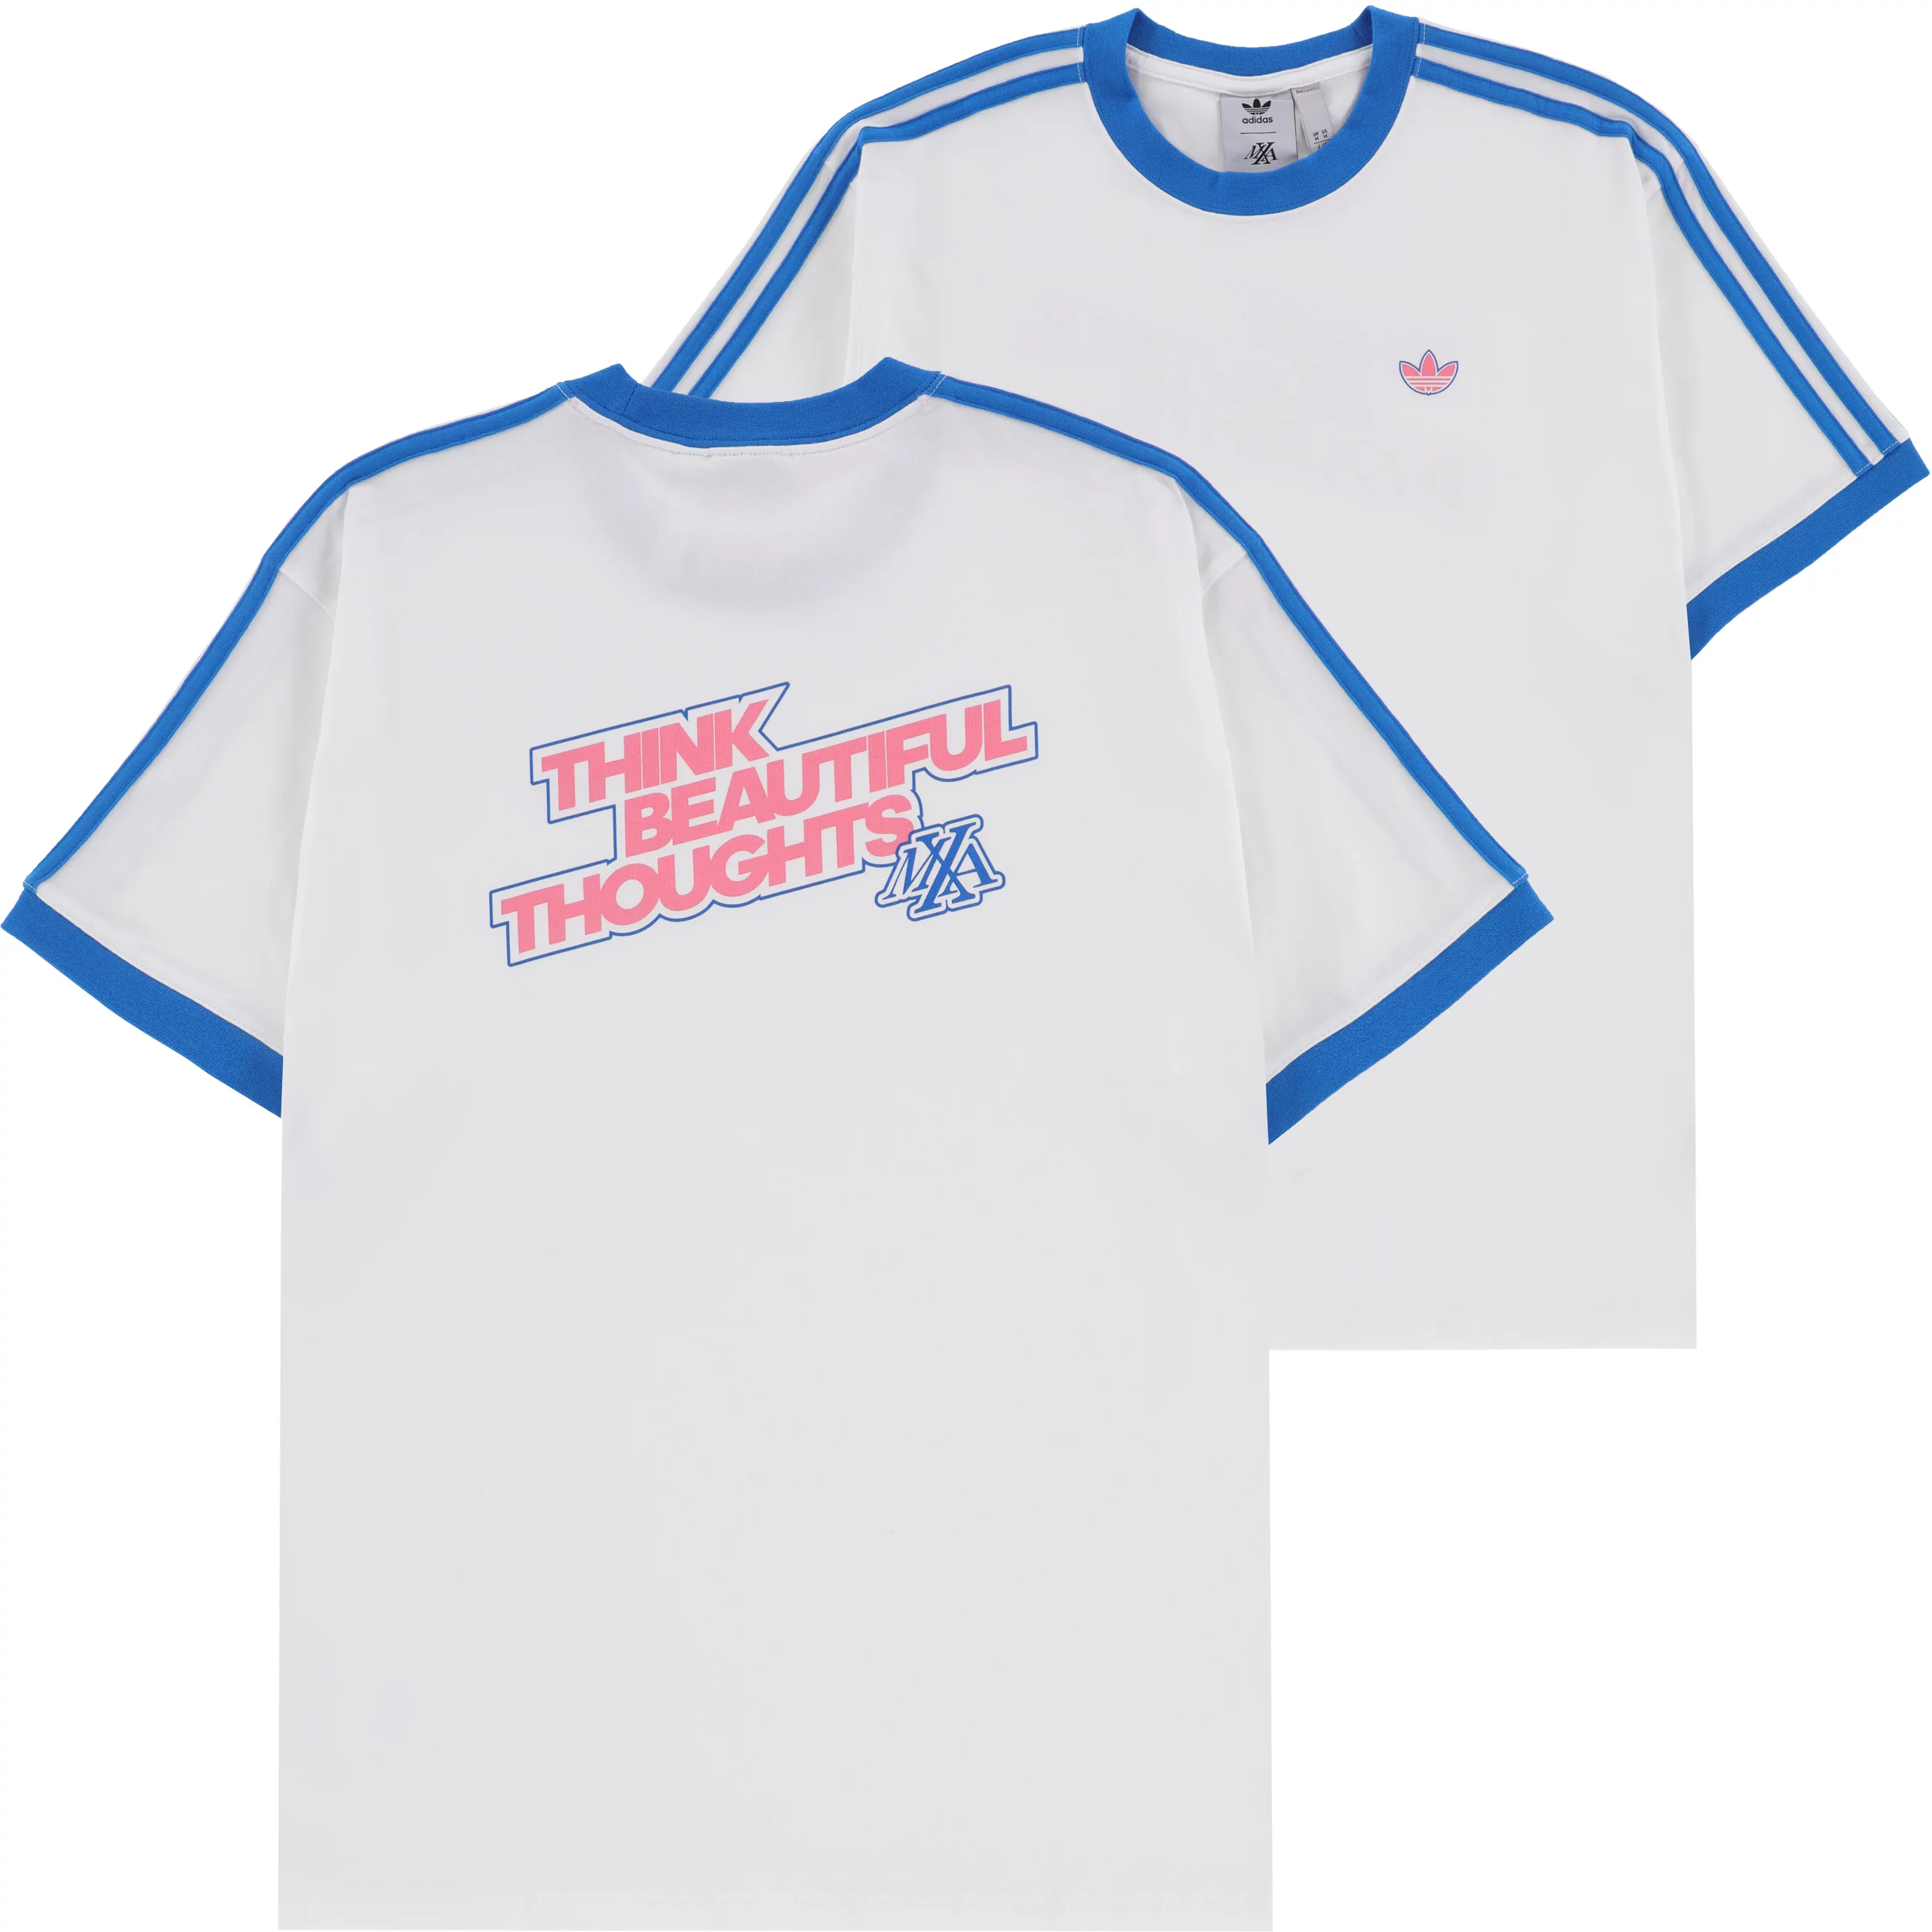 Ringer pink white/blue - Maxallure Jersey | Tactics bird/bliss Adidas